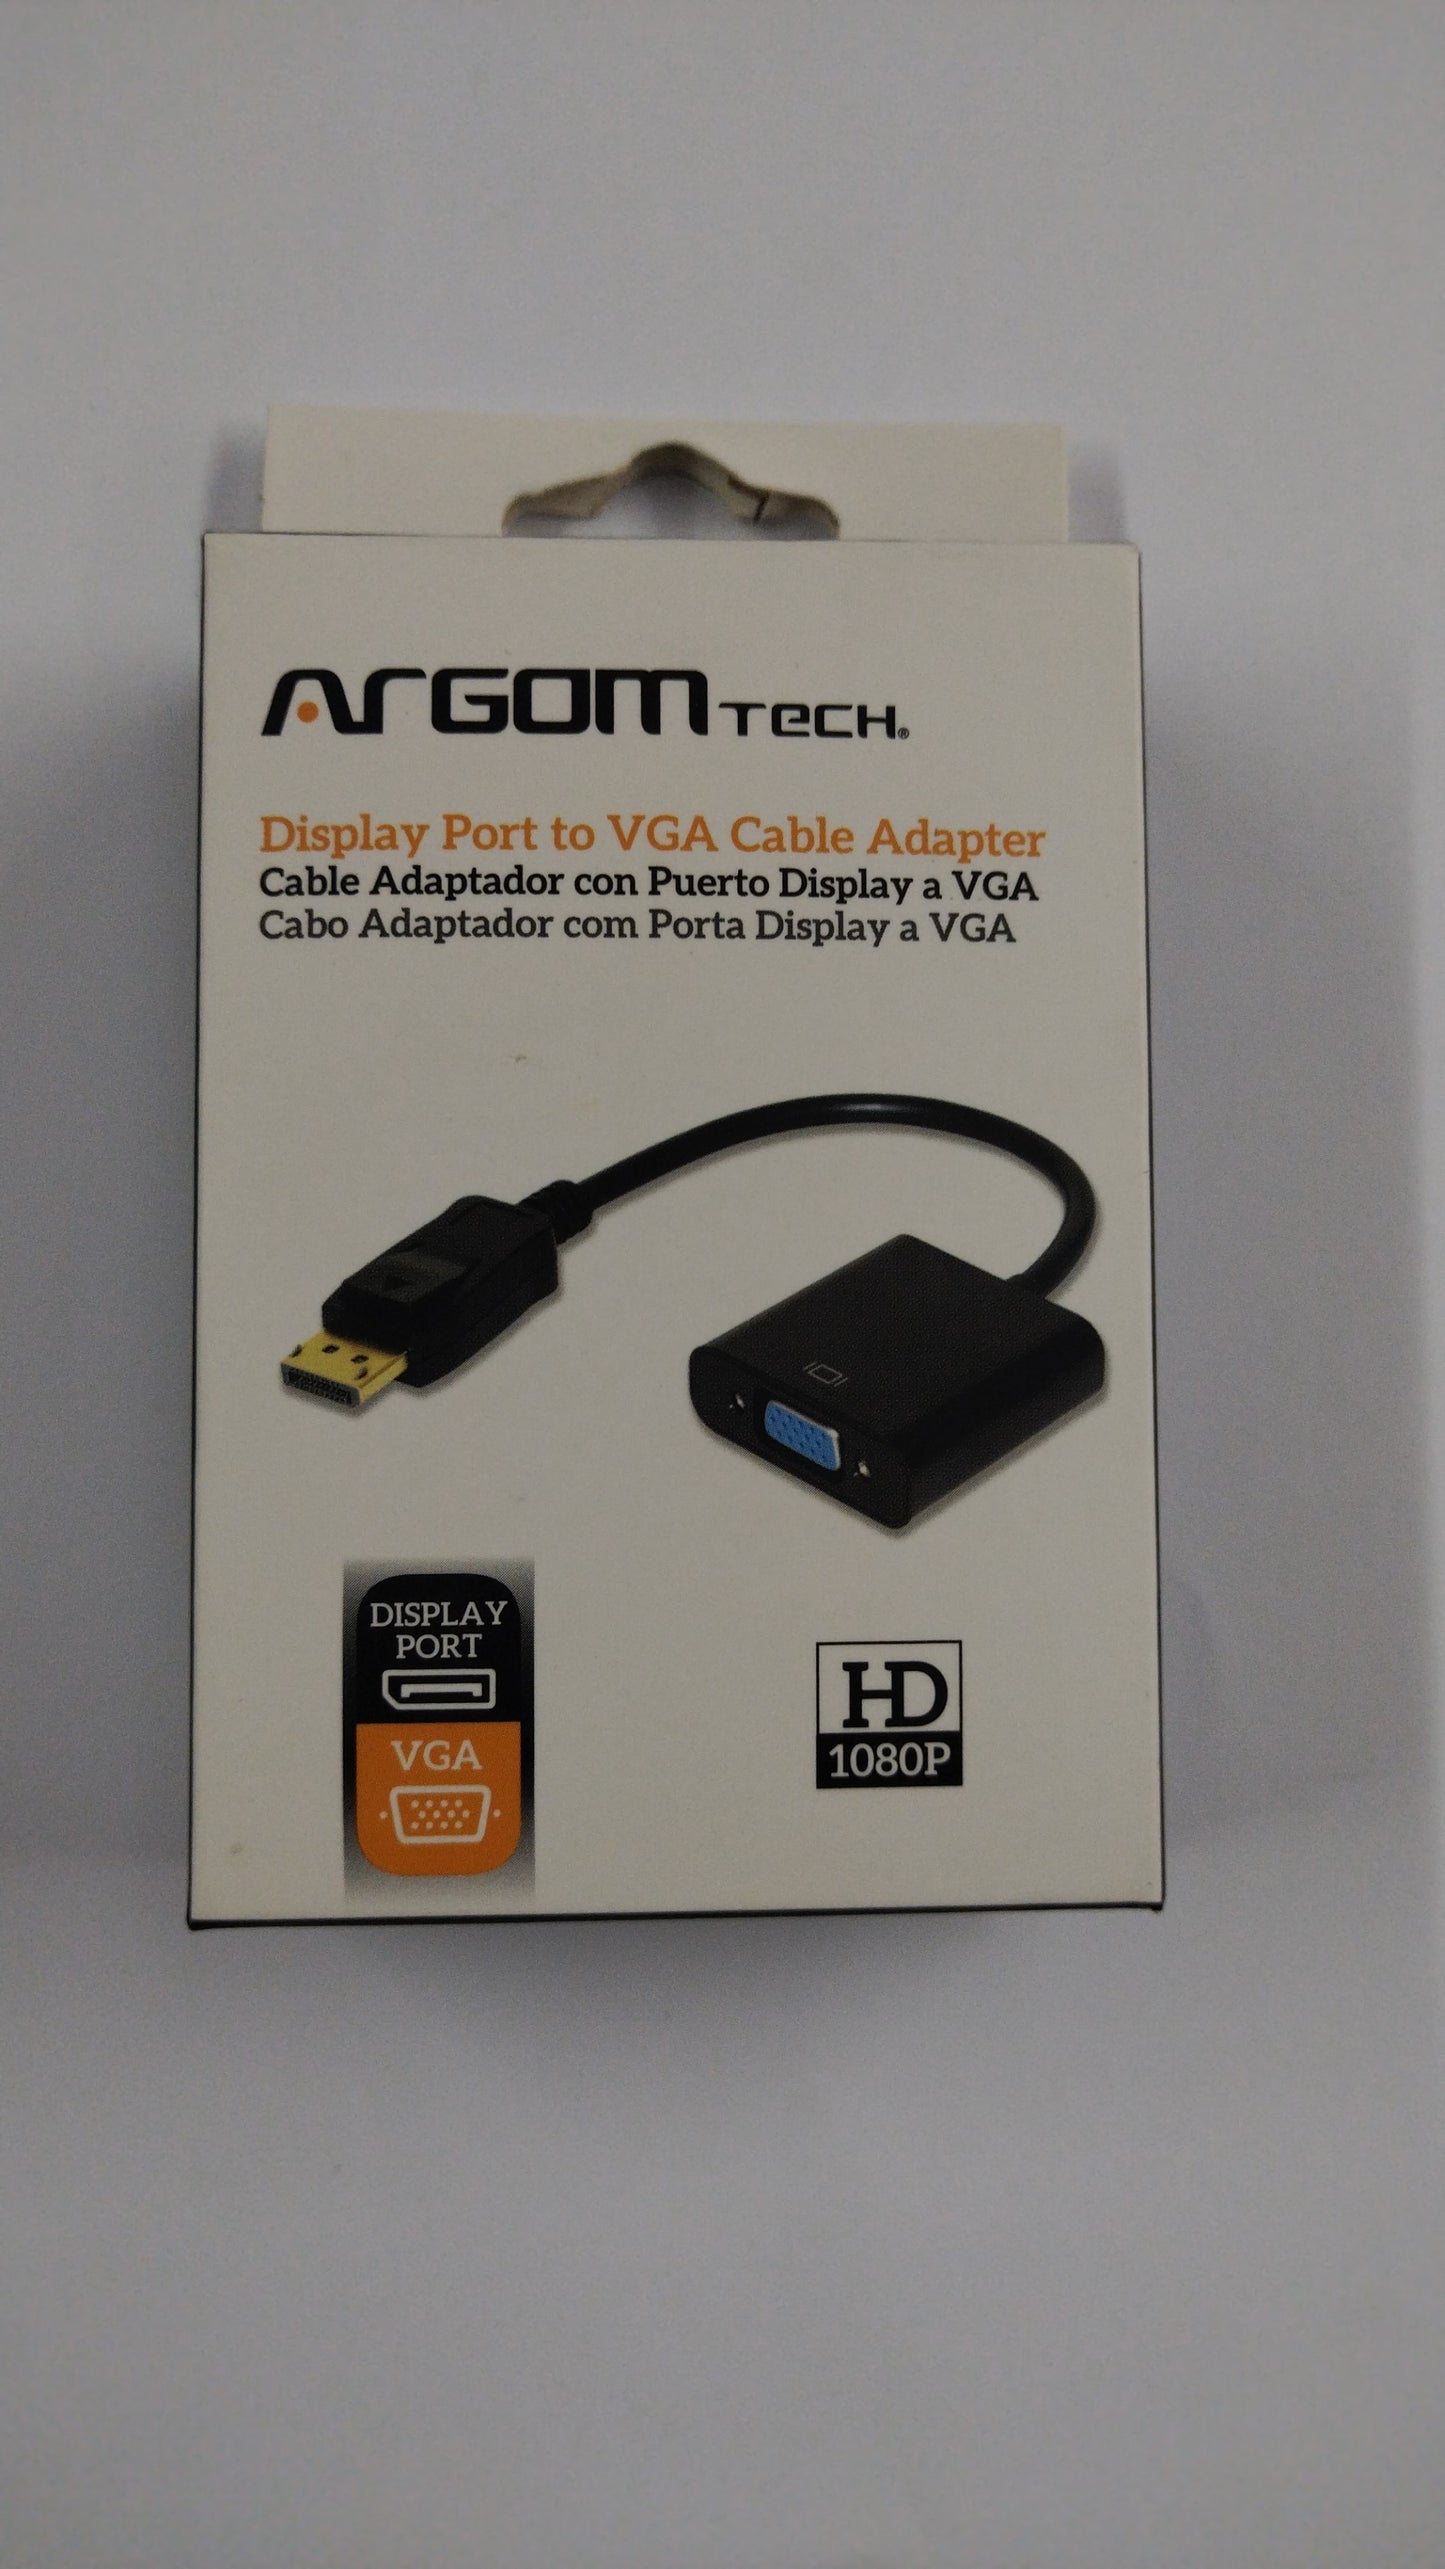 Cable Adaptador con Puerto Display a VGA